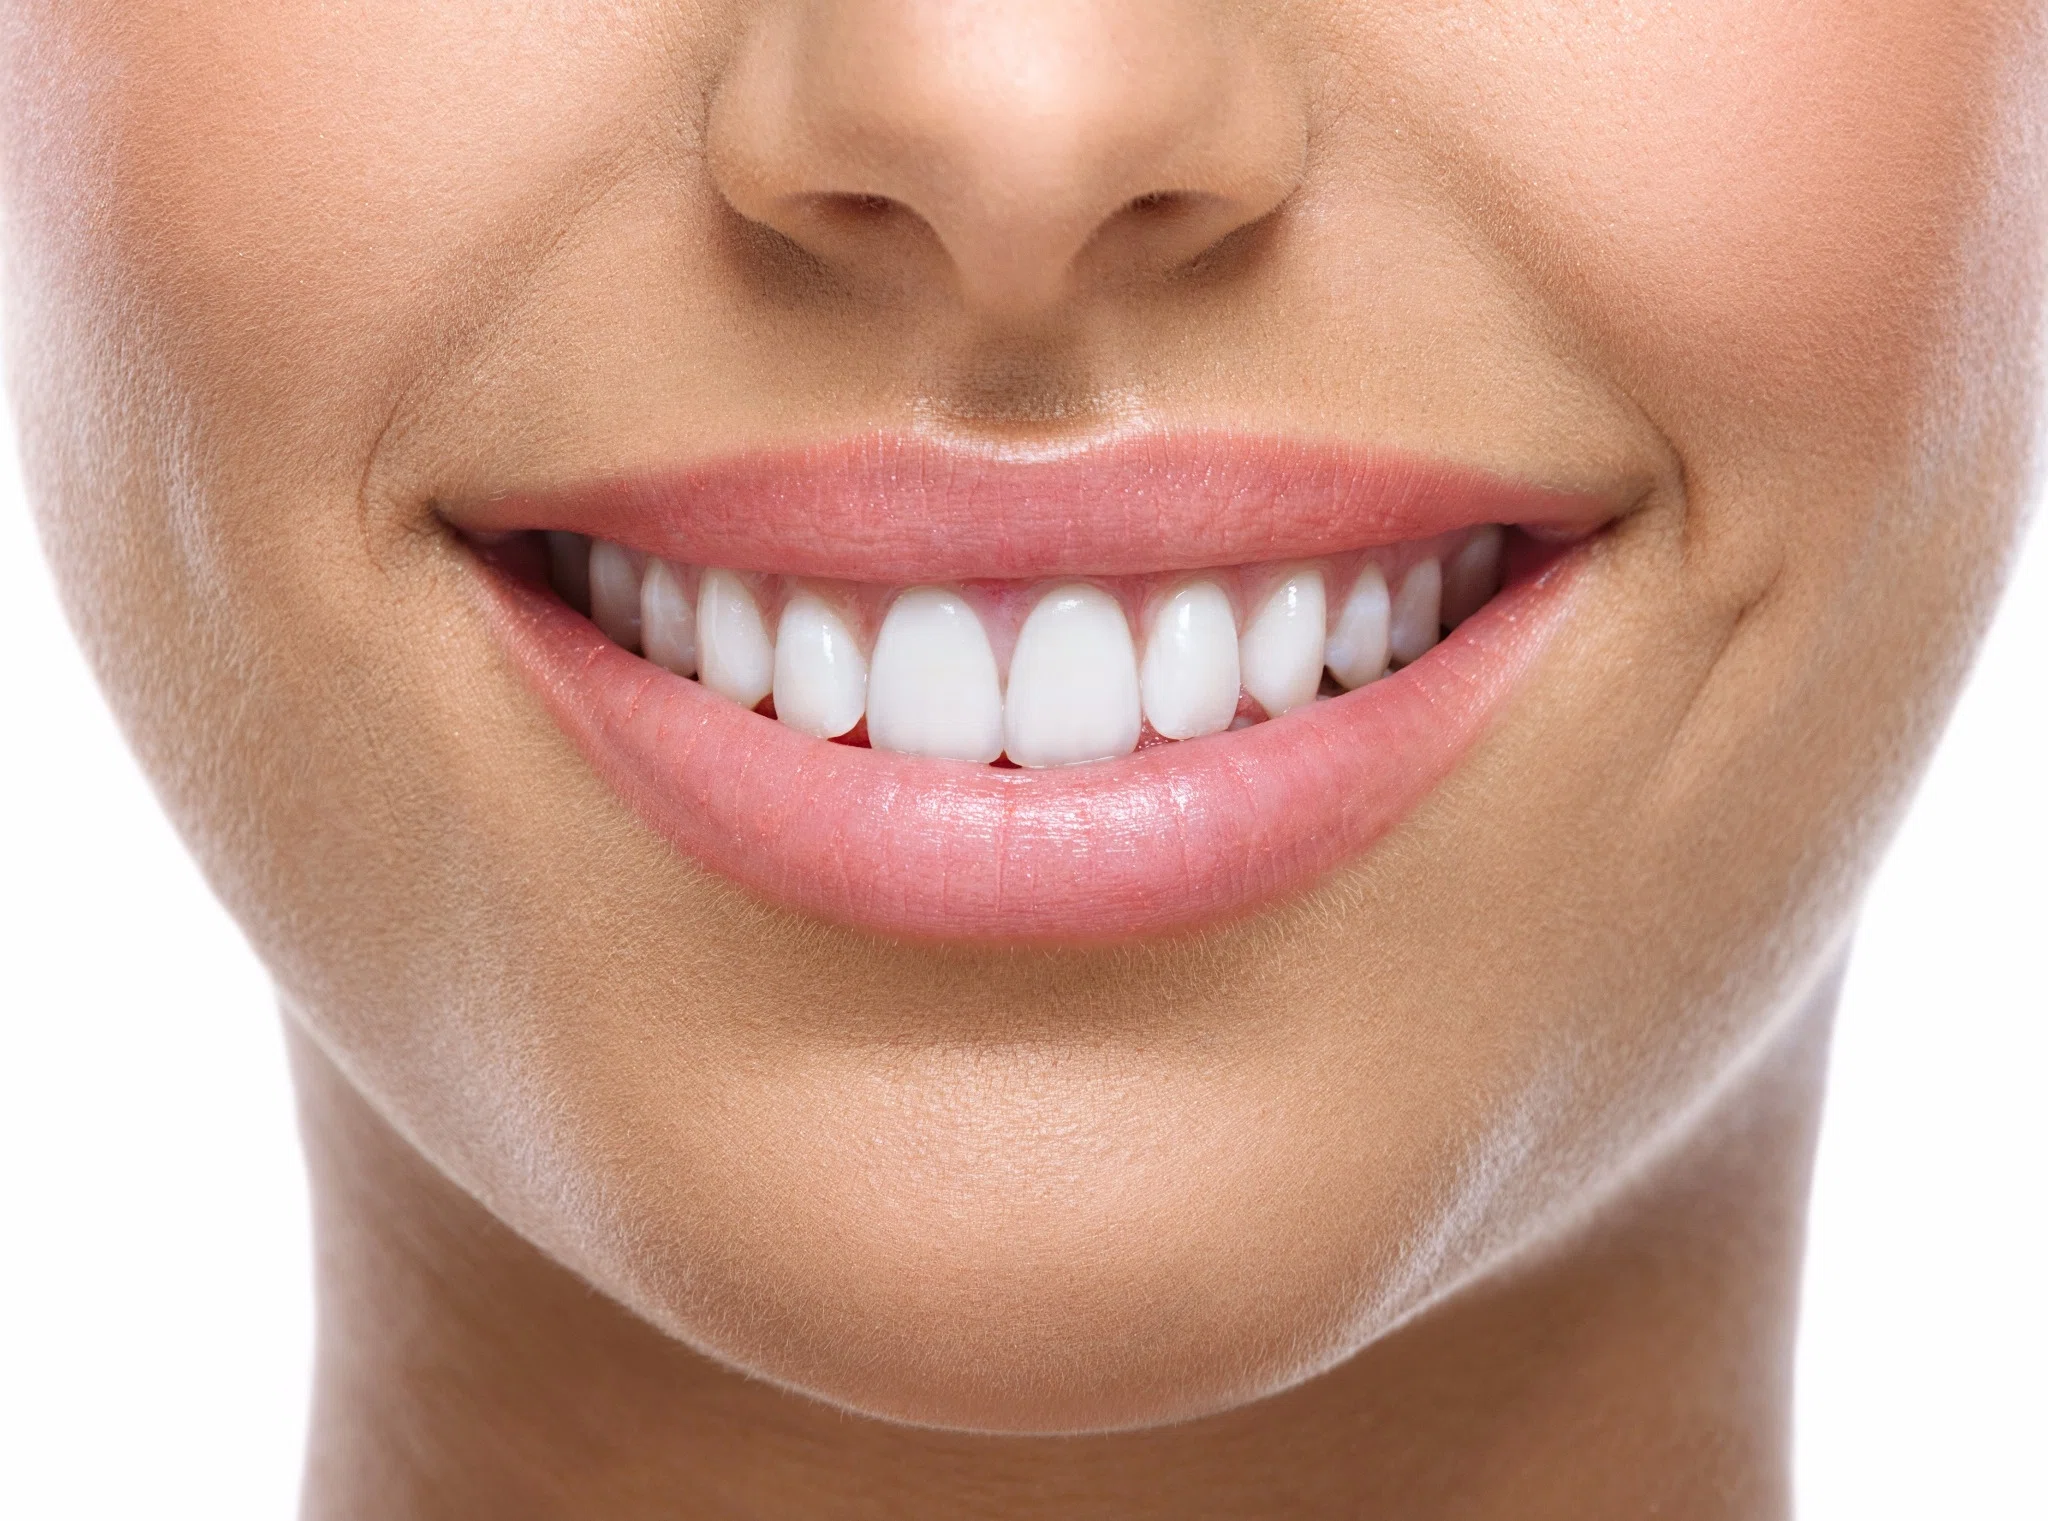 invisalign teeth aligner smiledirectclub dealspotr marketing startup makes updated november